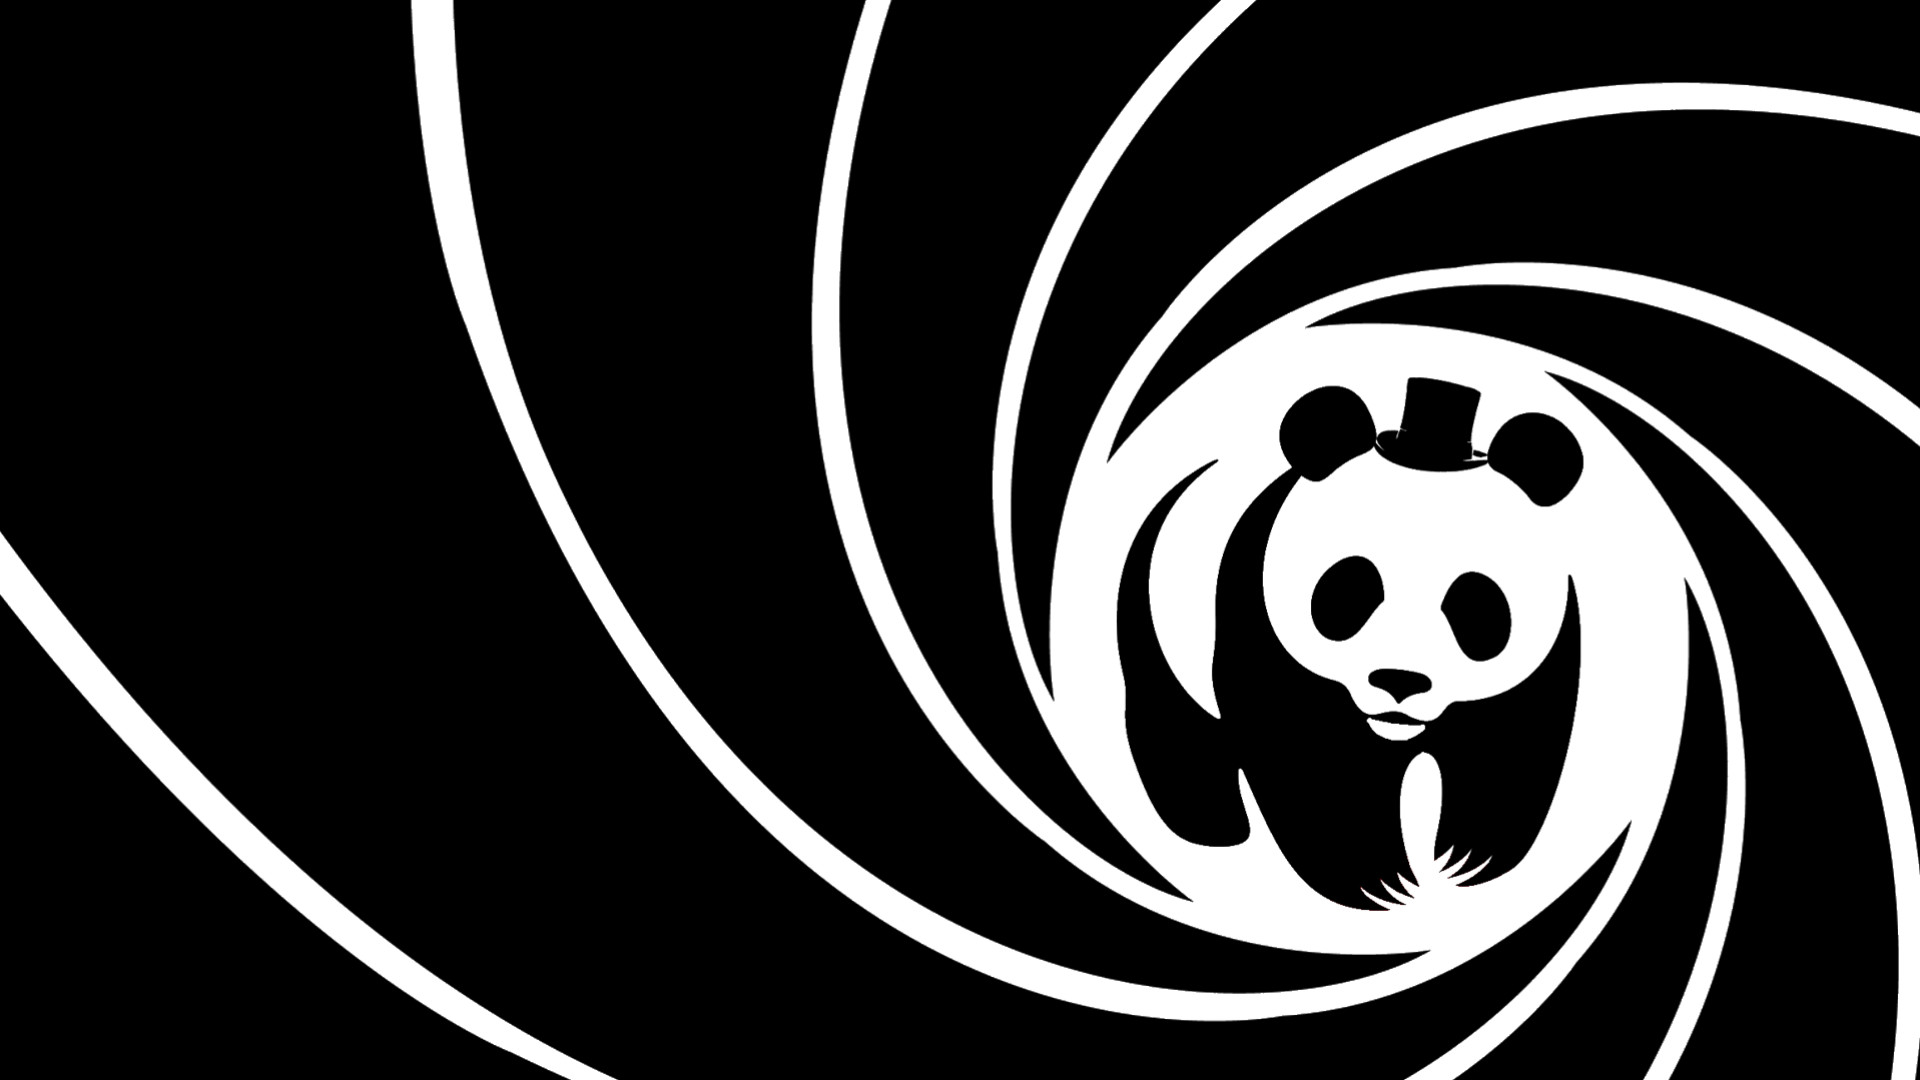 1920x1080 Top anime panda wallpaper images wallpapers - Panda Wallpapers Hd Download  Free. Download